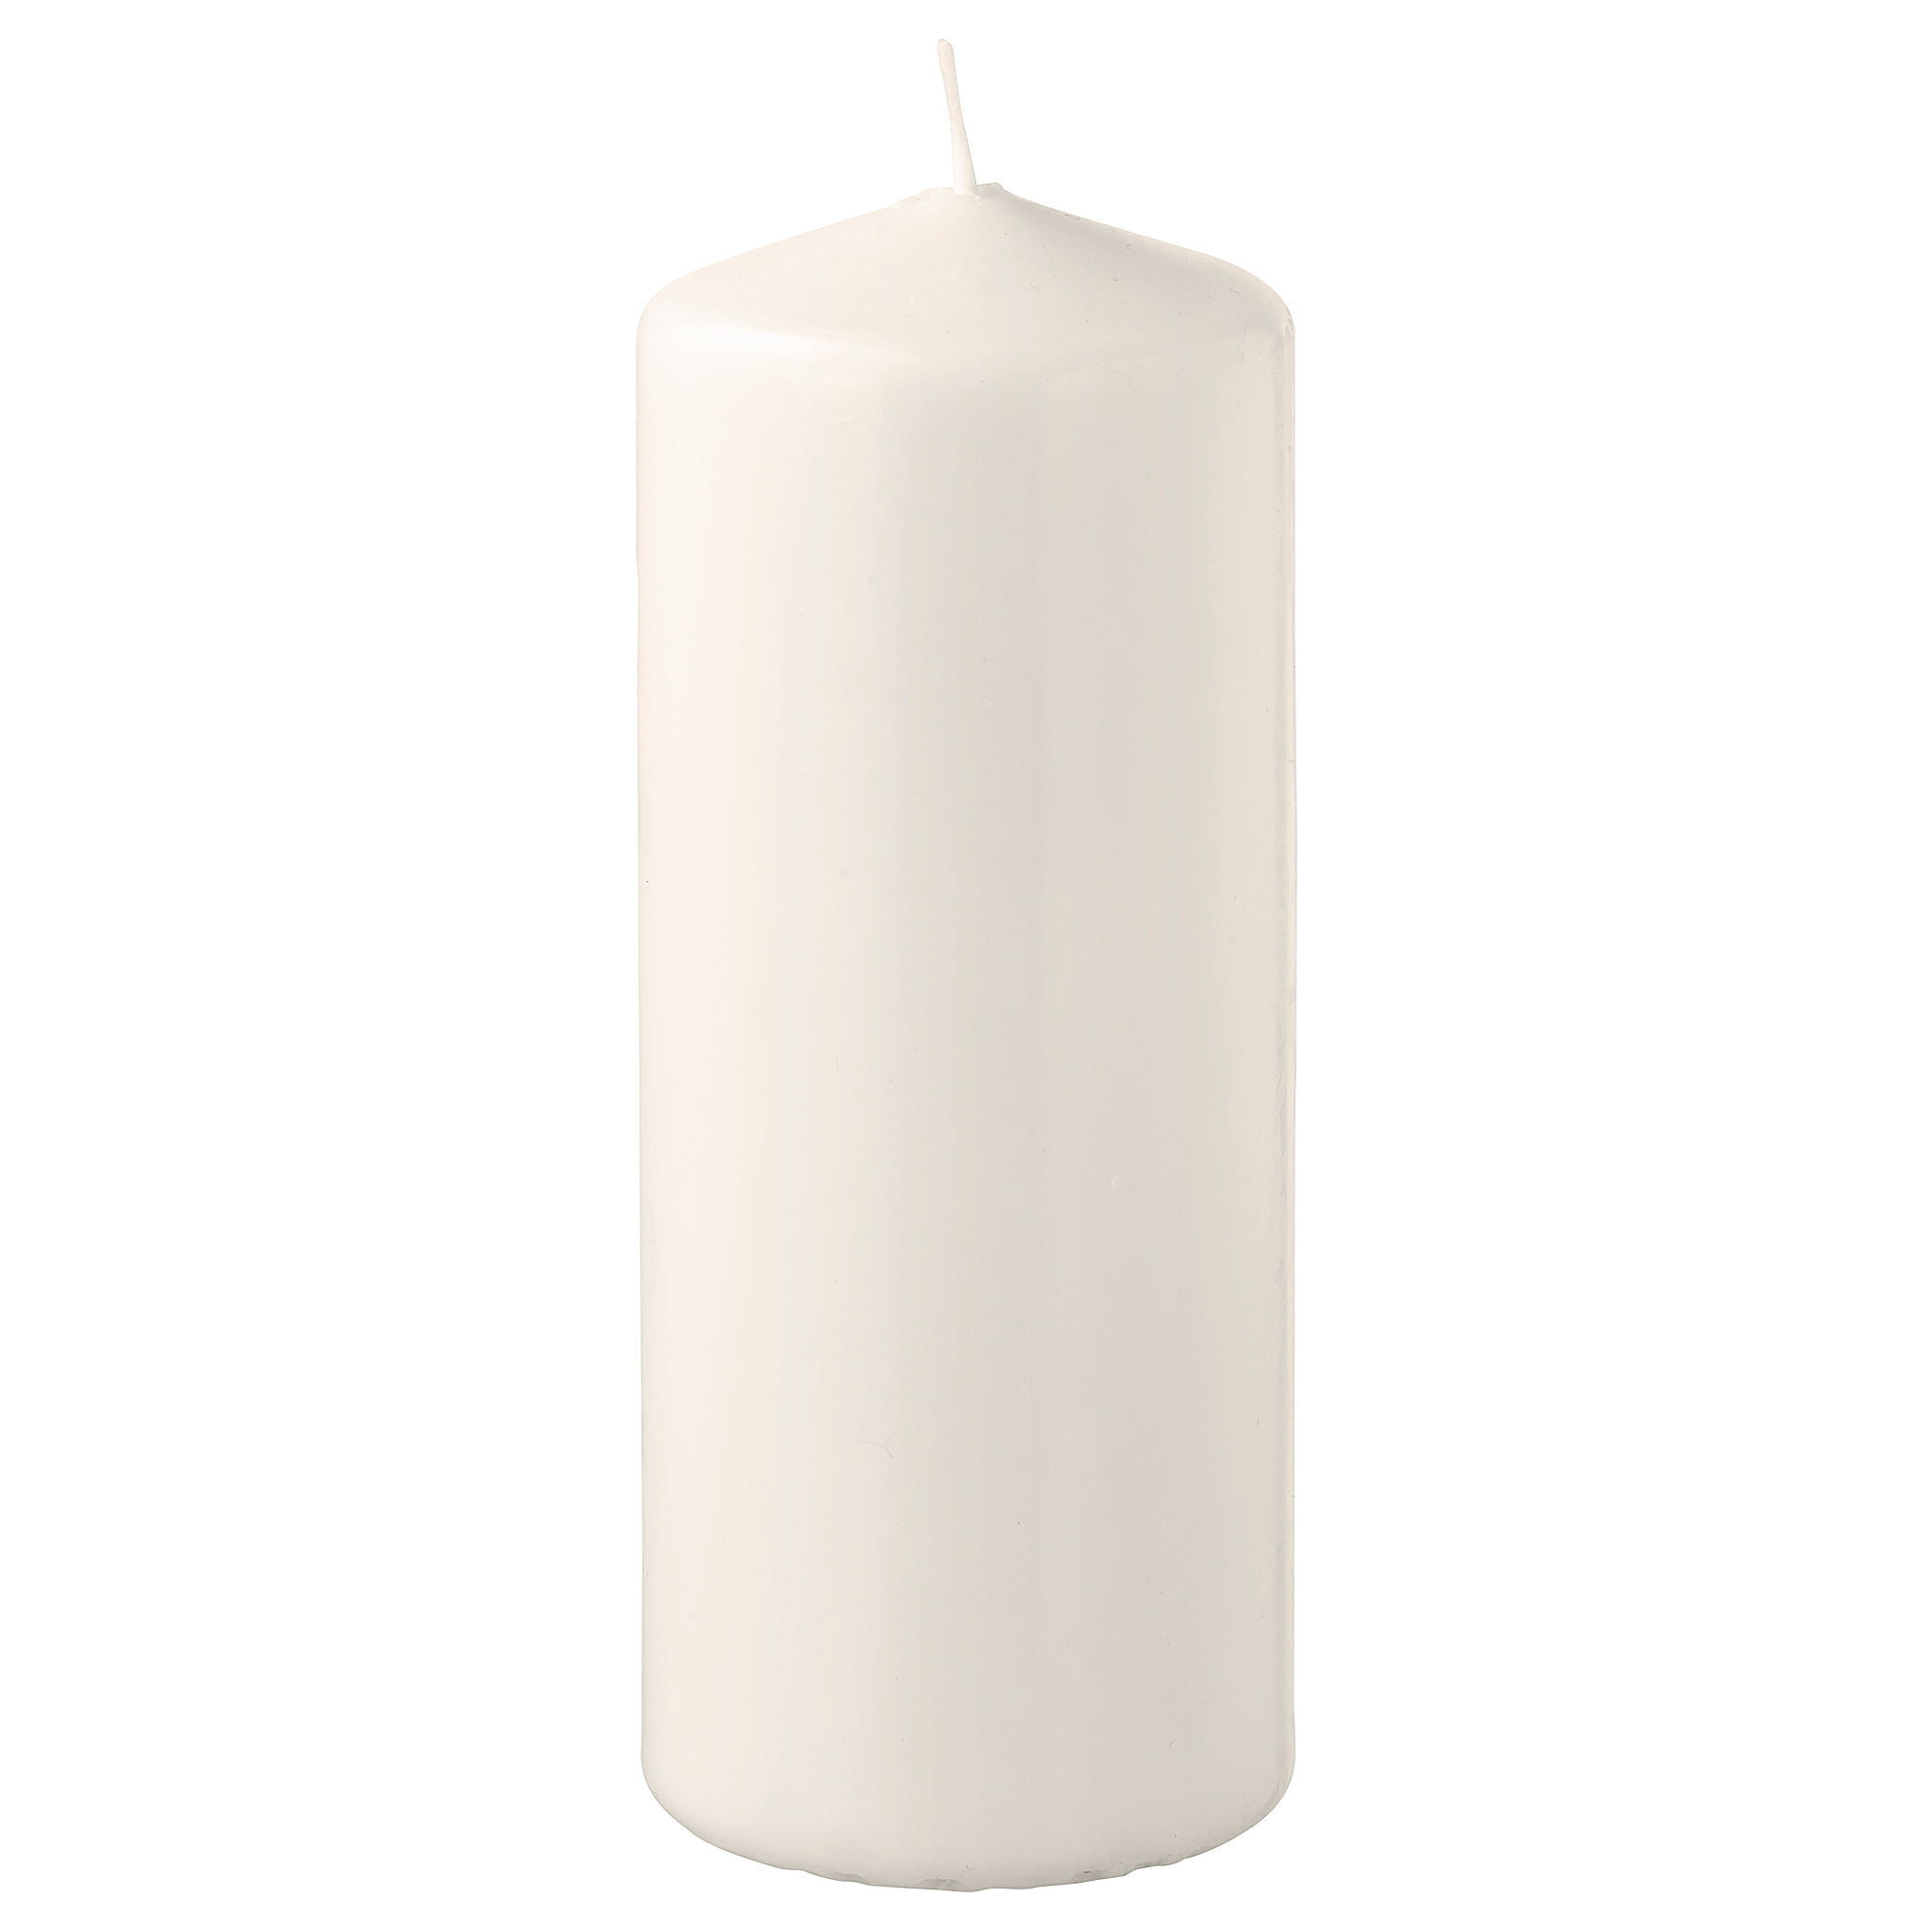 FENOMEN unscented pillar candle